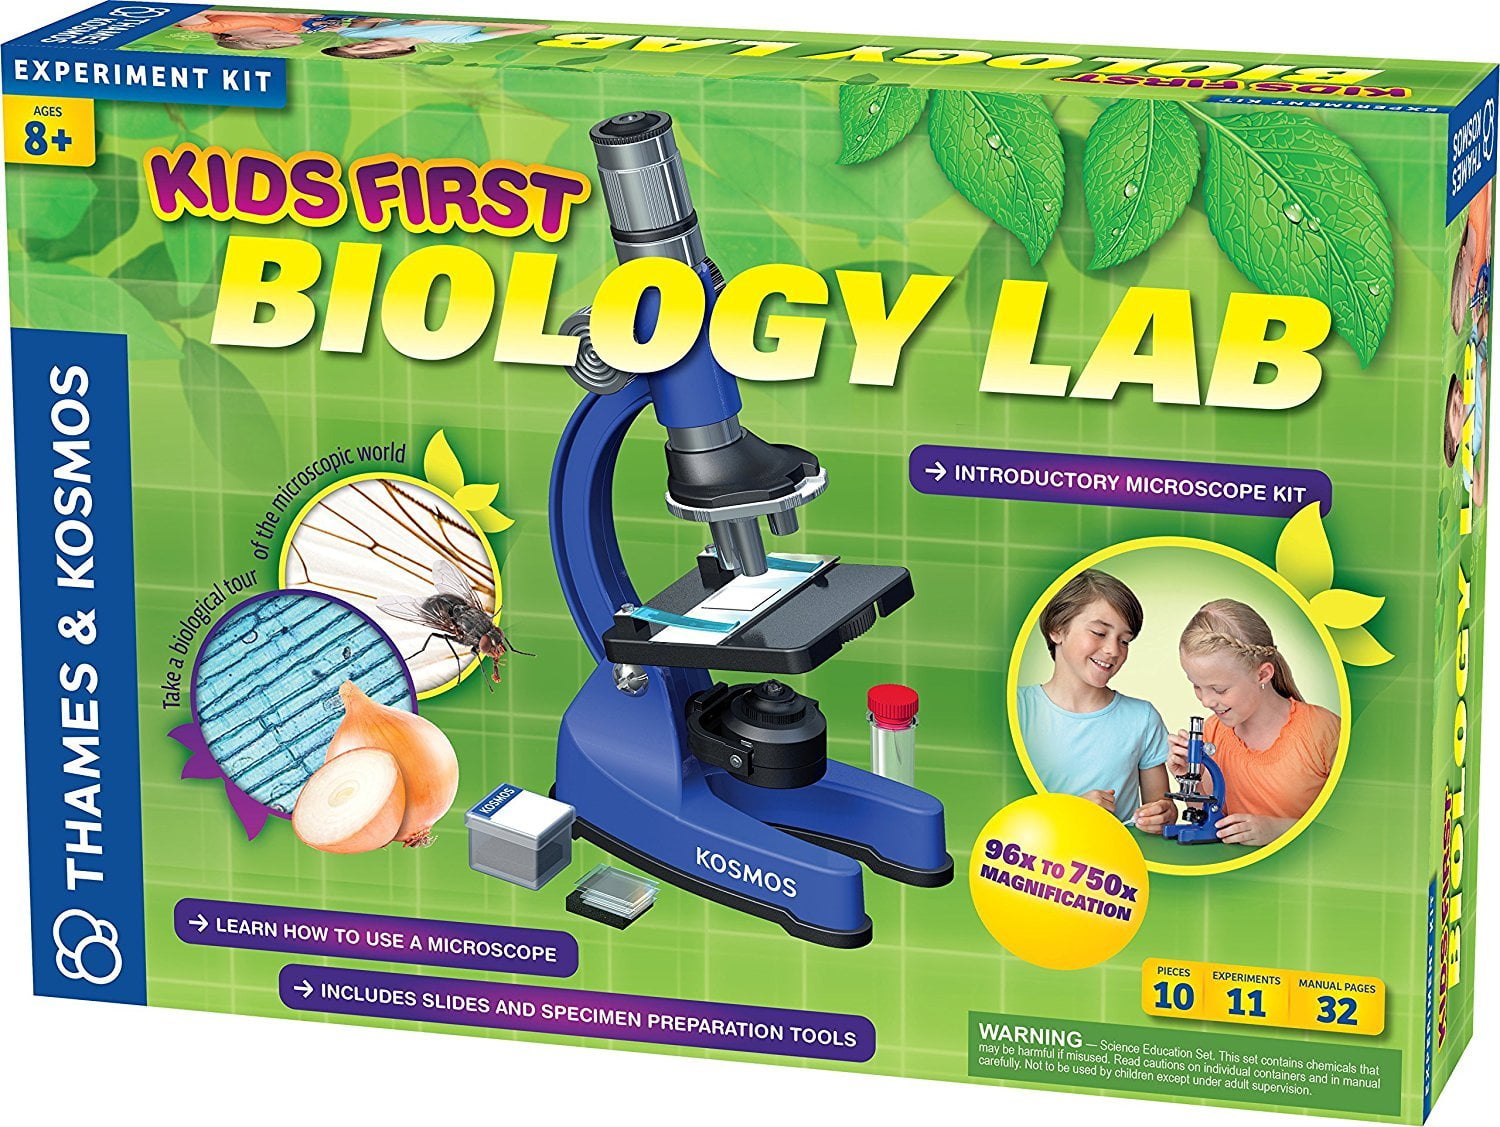 biology science kits